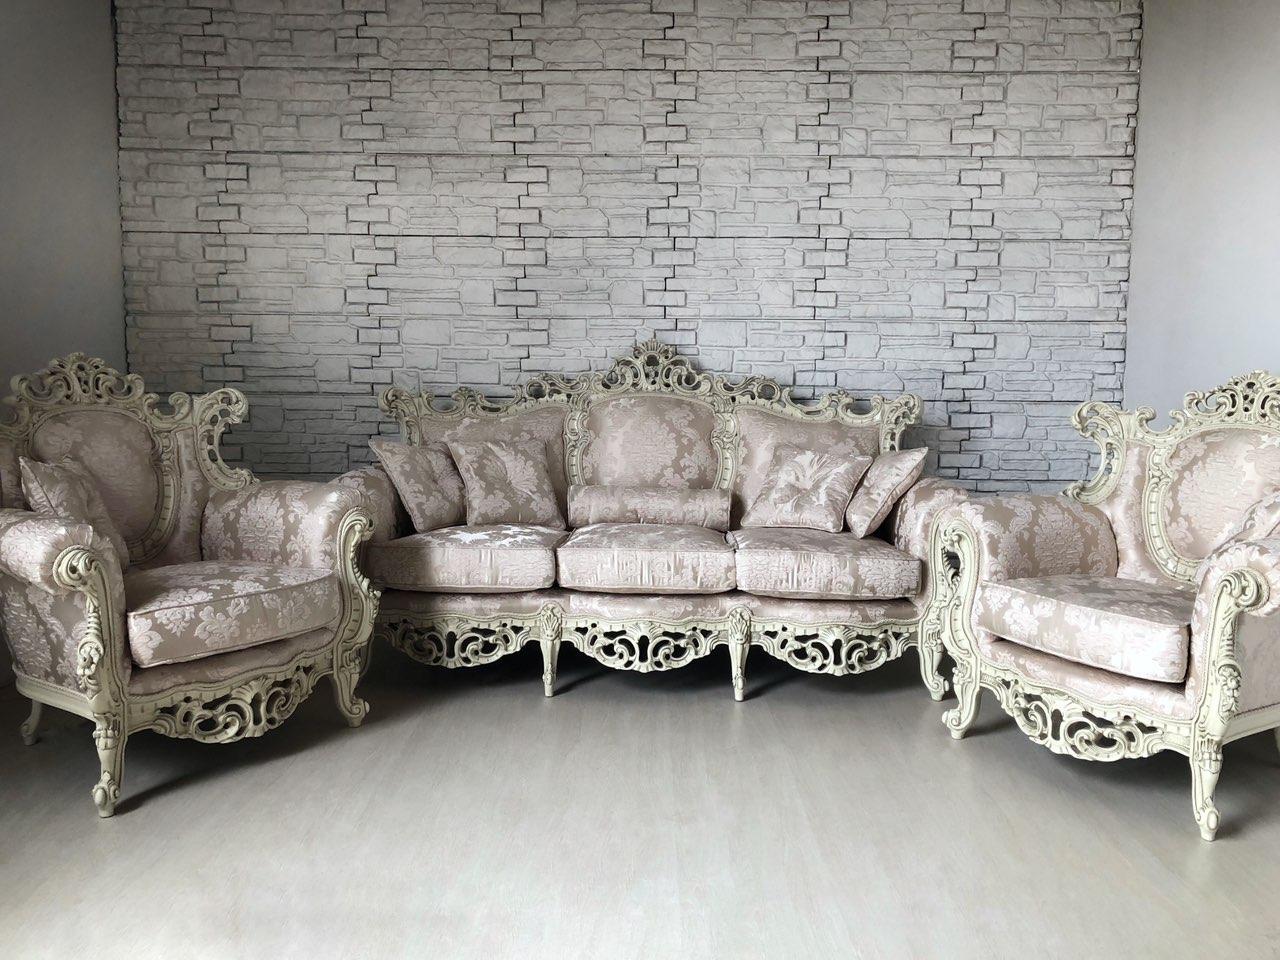 Комплект мягкой мебели в стиле барокко диван и два кресла, каркас